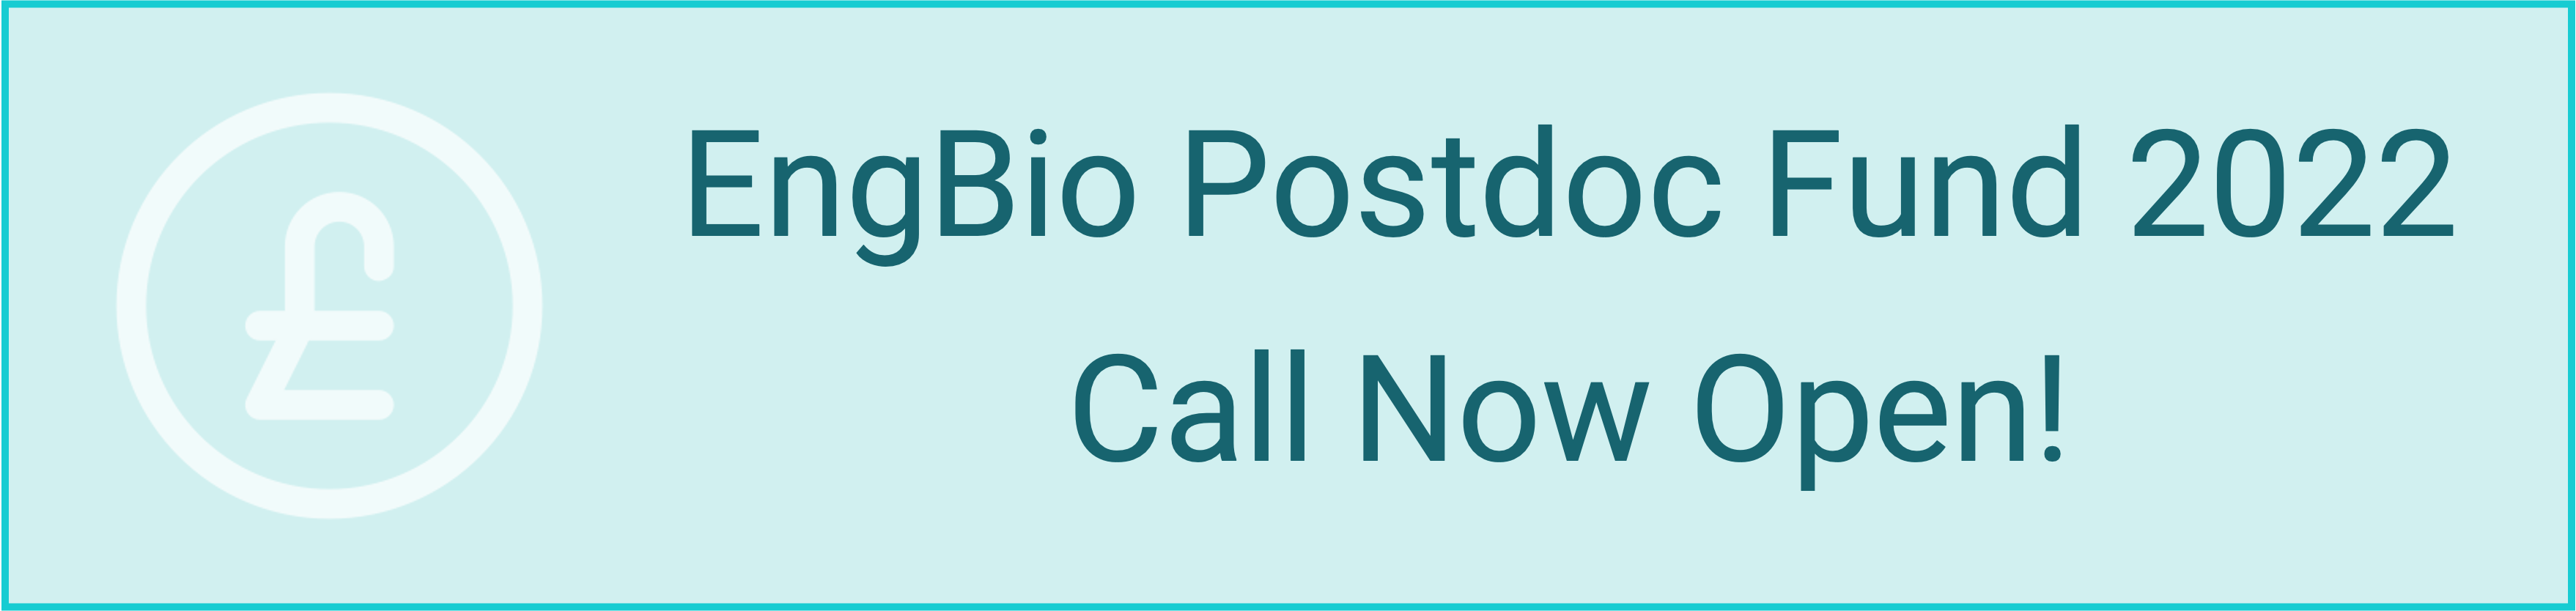 EngBio Postdoc Fund 2022 - Call Now Open!